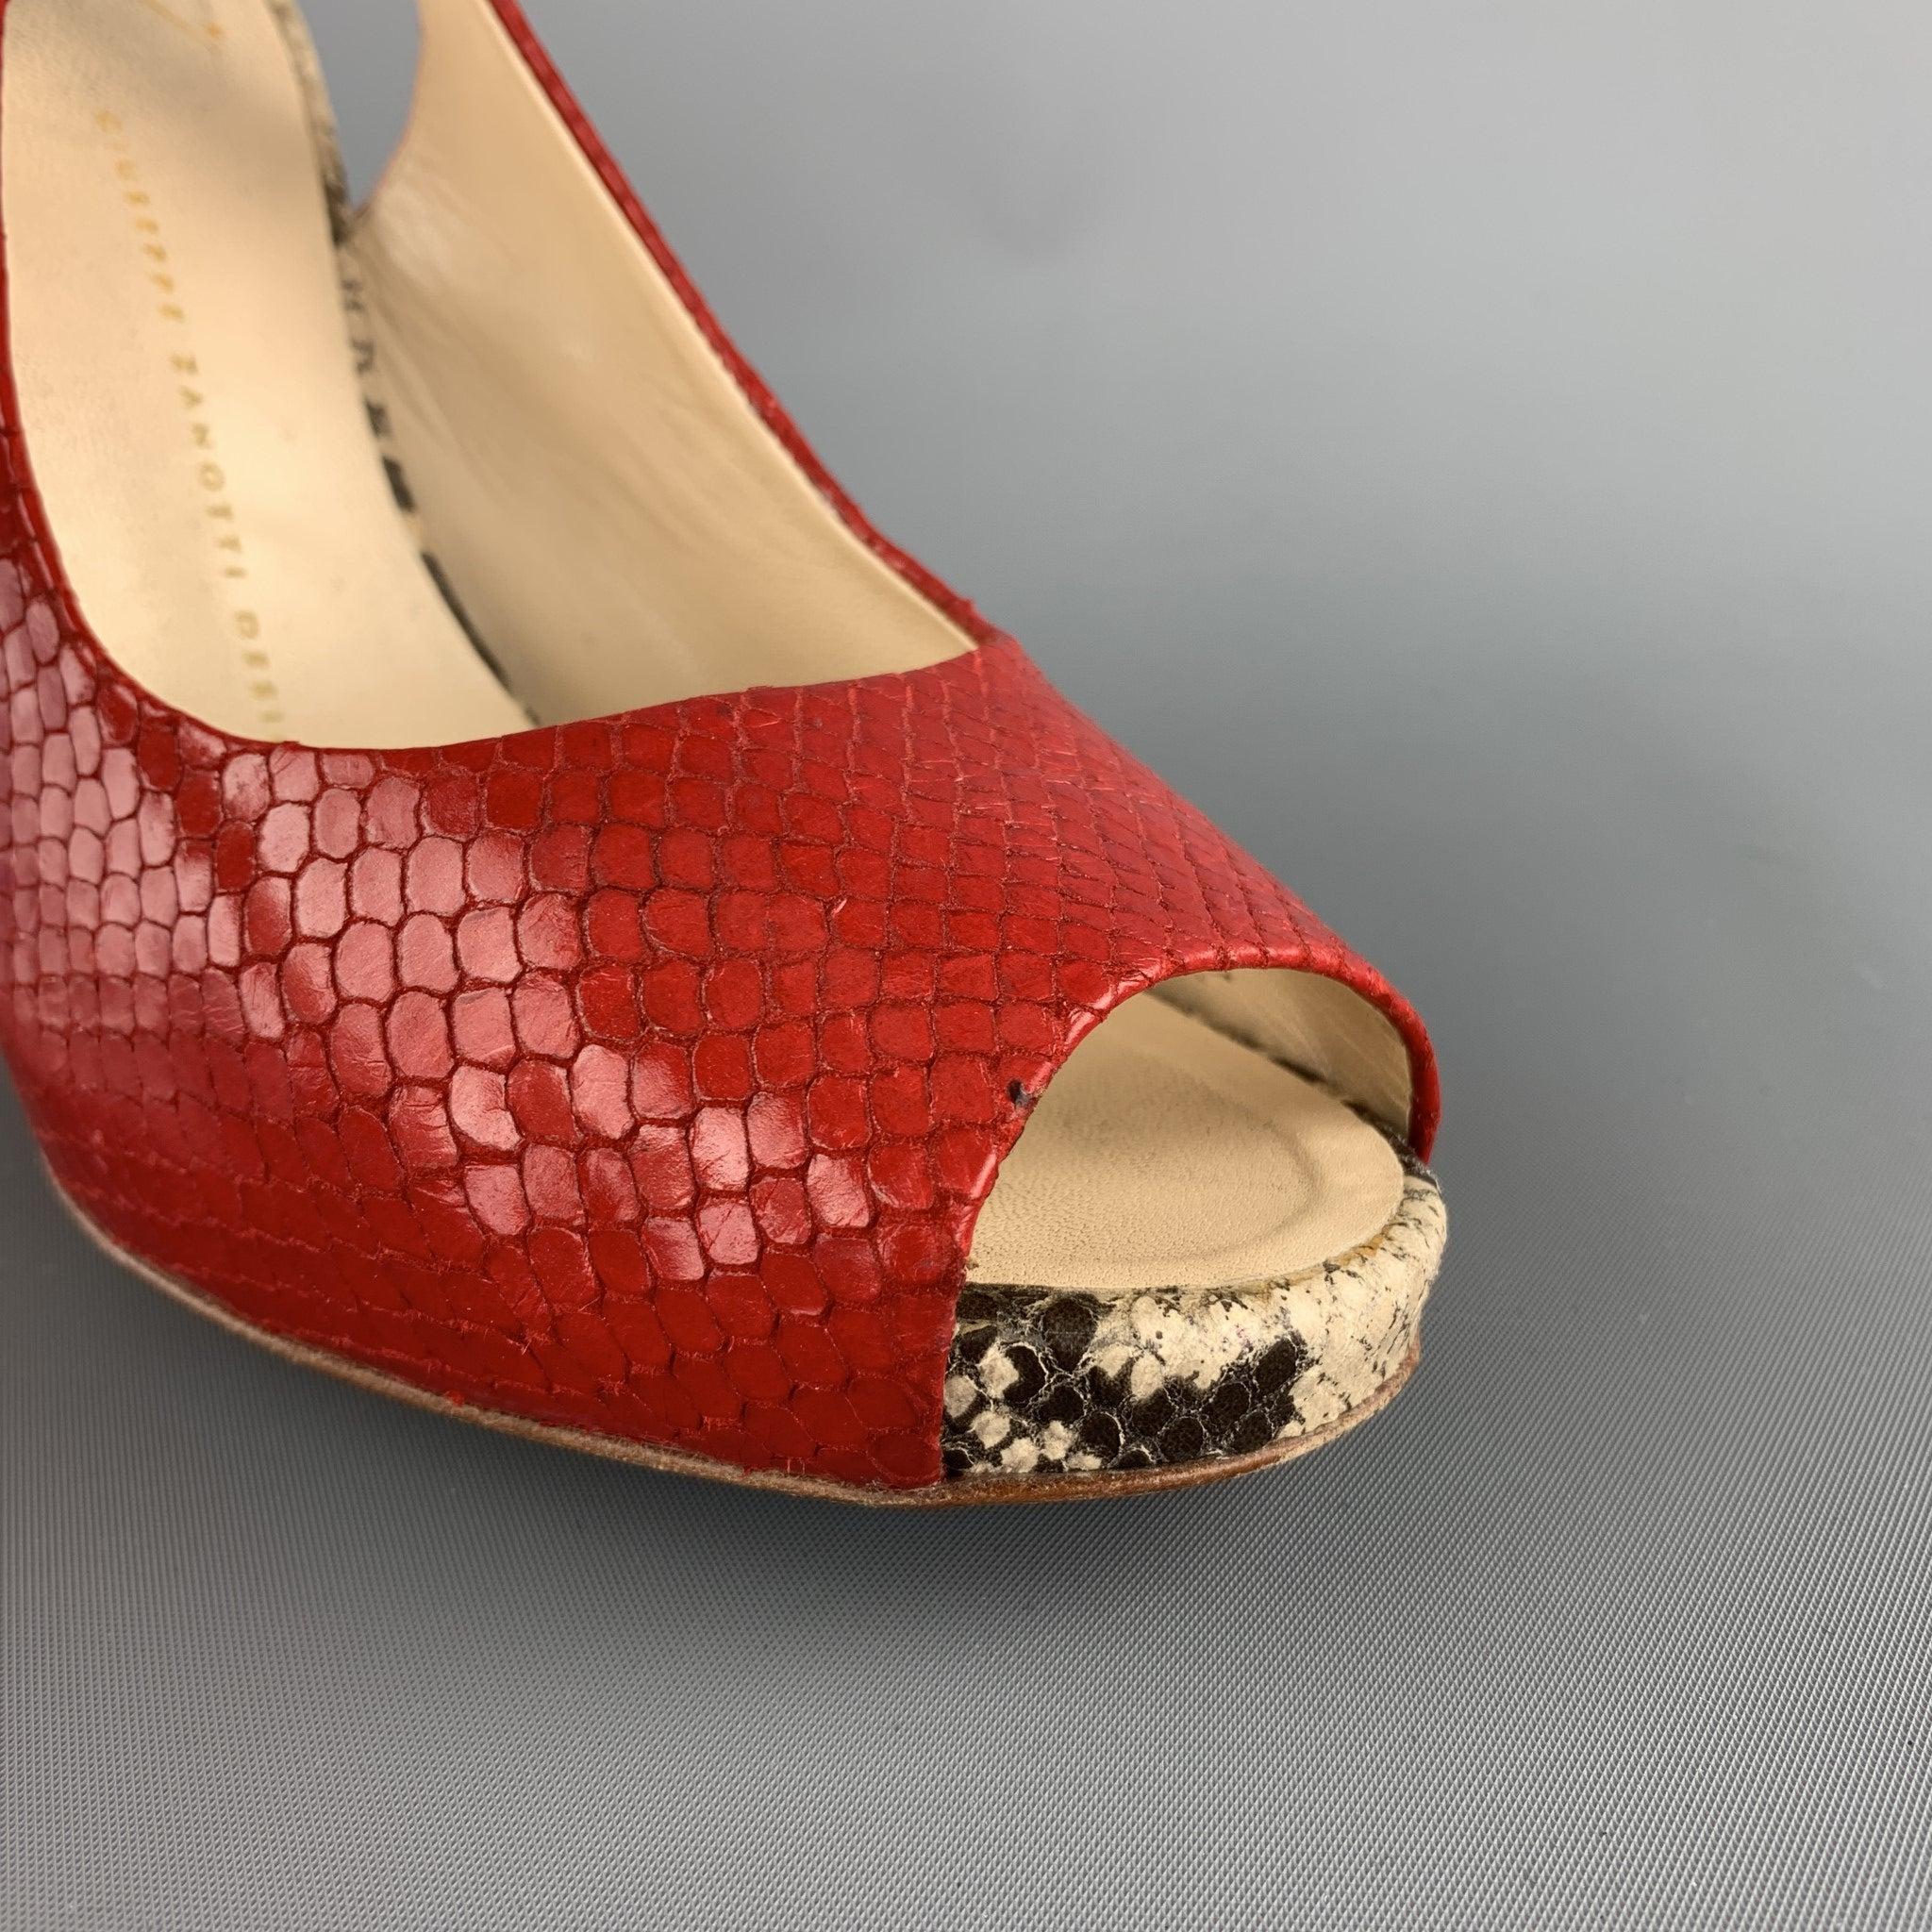 GIUSEPPE ZANOTTI Size 8 Red & Beige Snake Skin Slingback Peep Toe Pumps For Sale 1